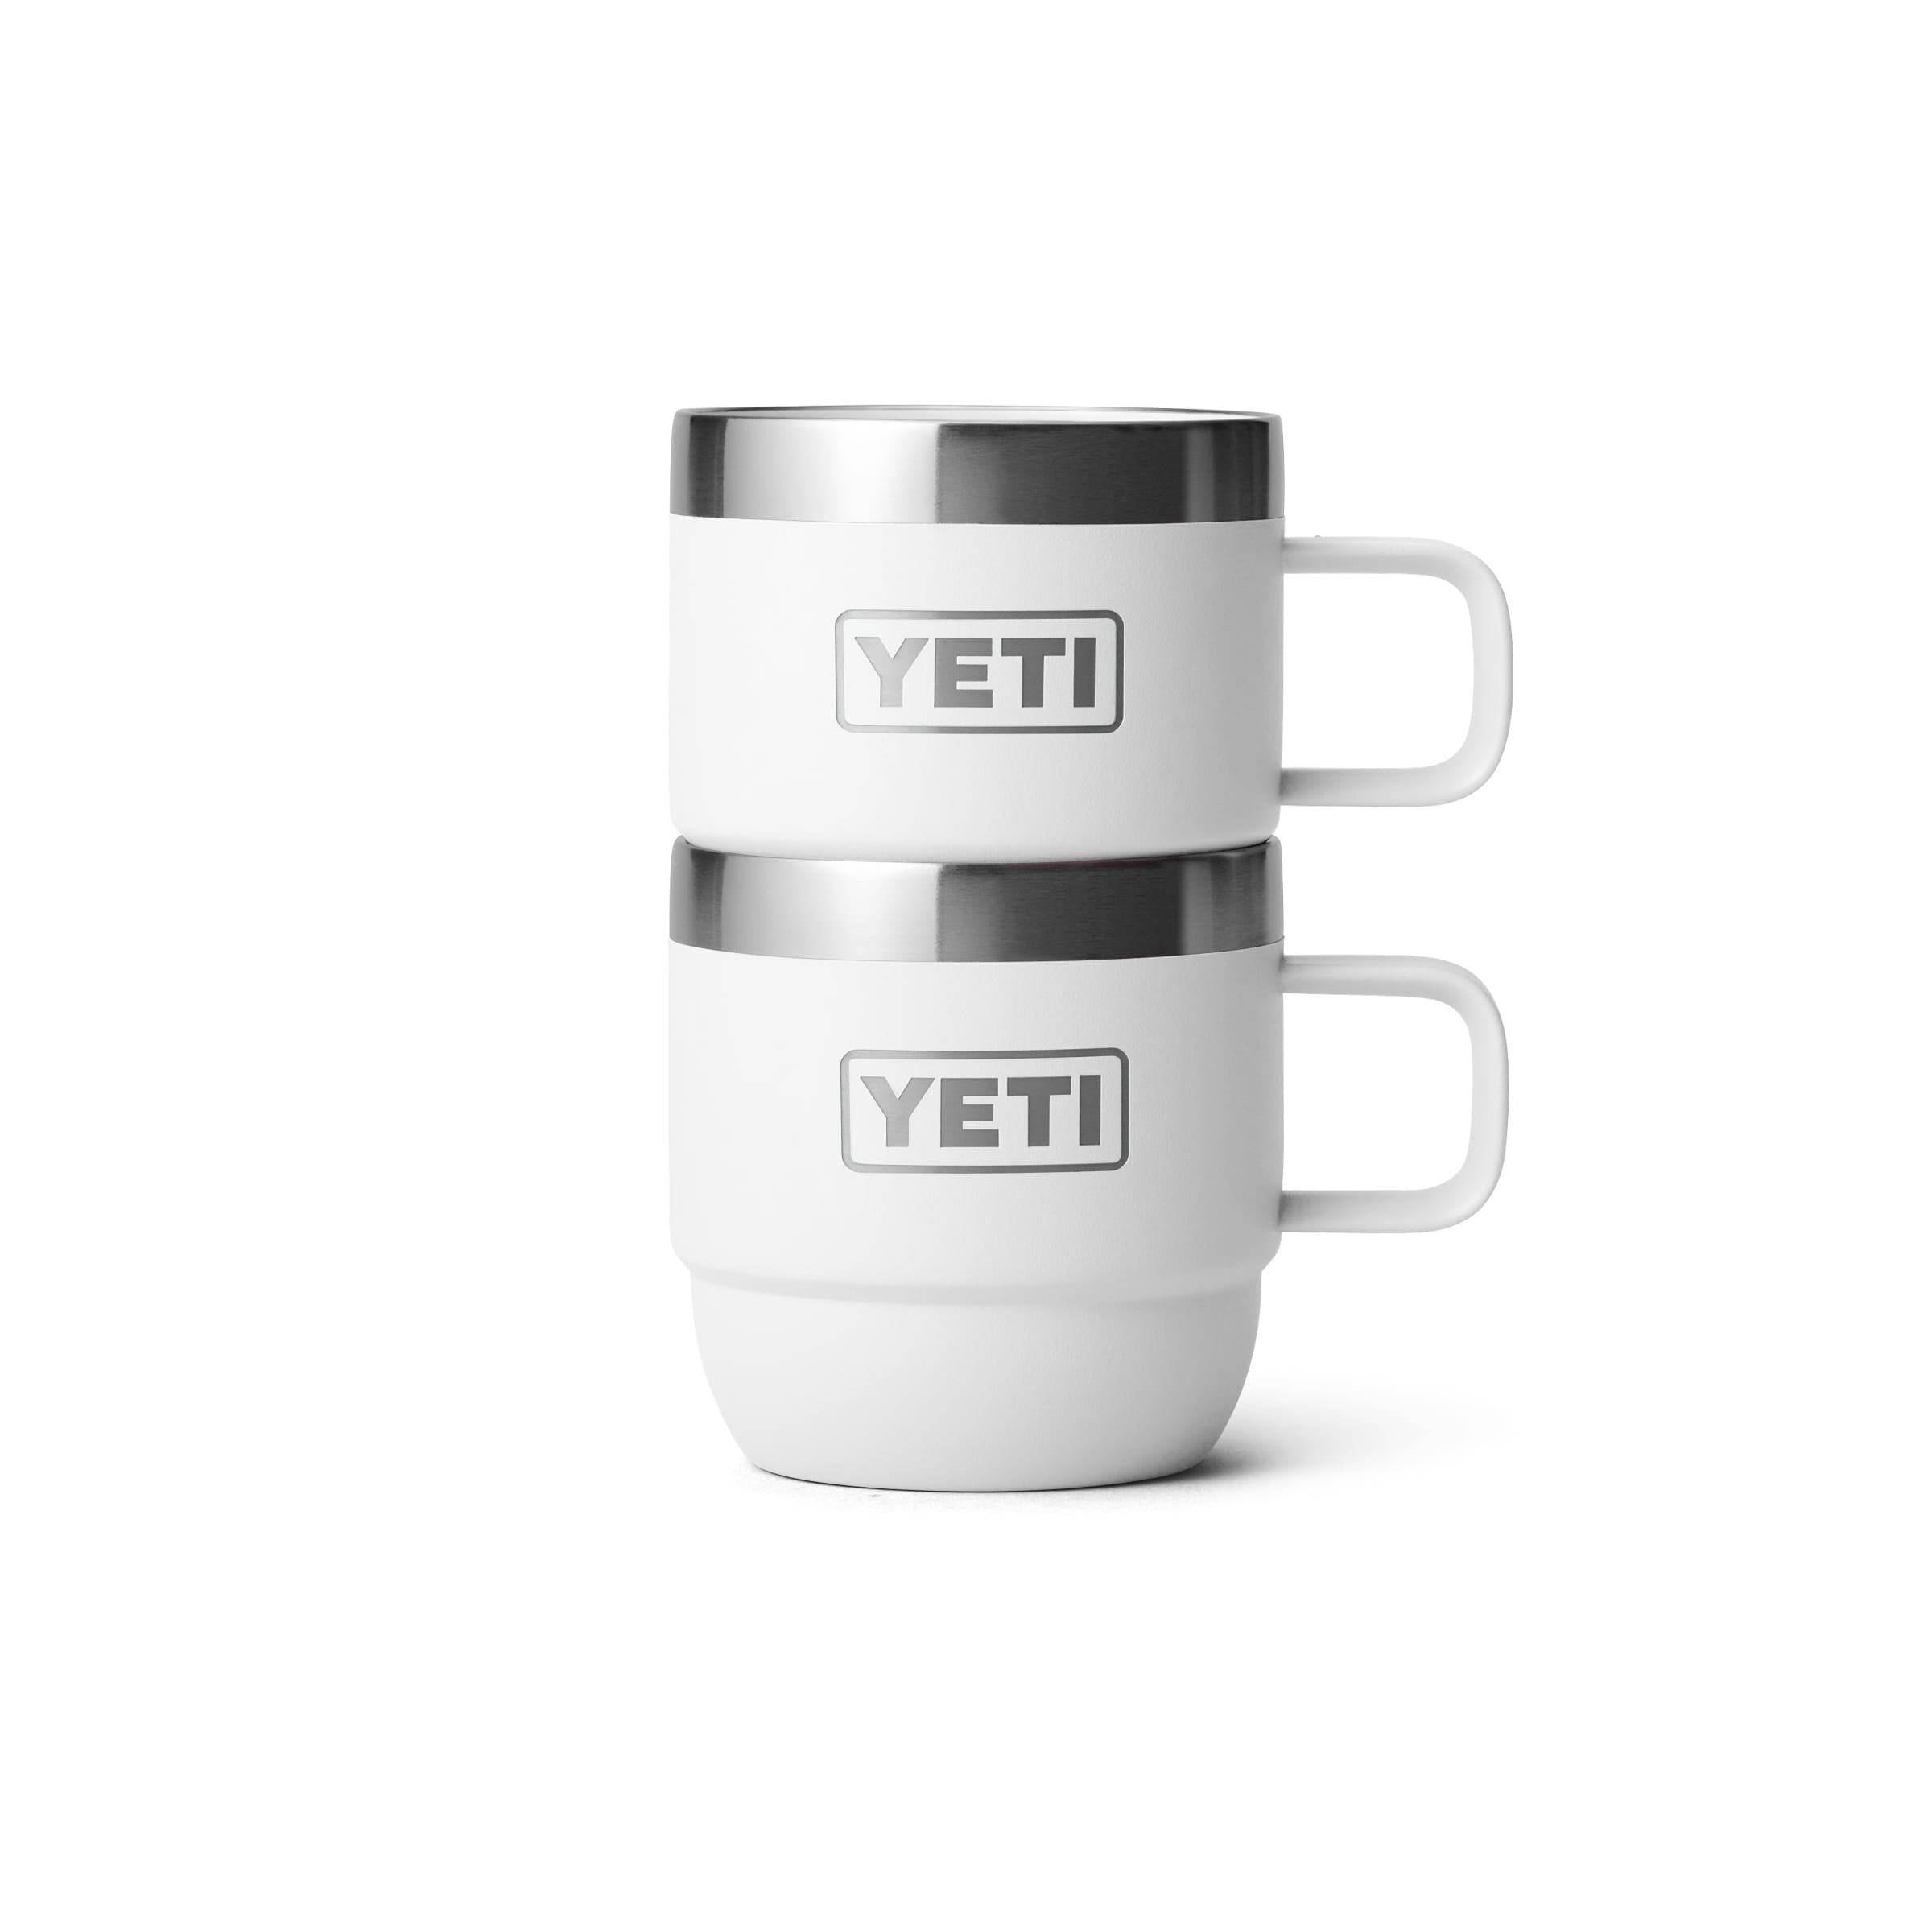 YETI® Rambler® Espresso Stackable Cups - 2 Pack